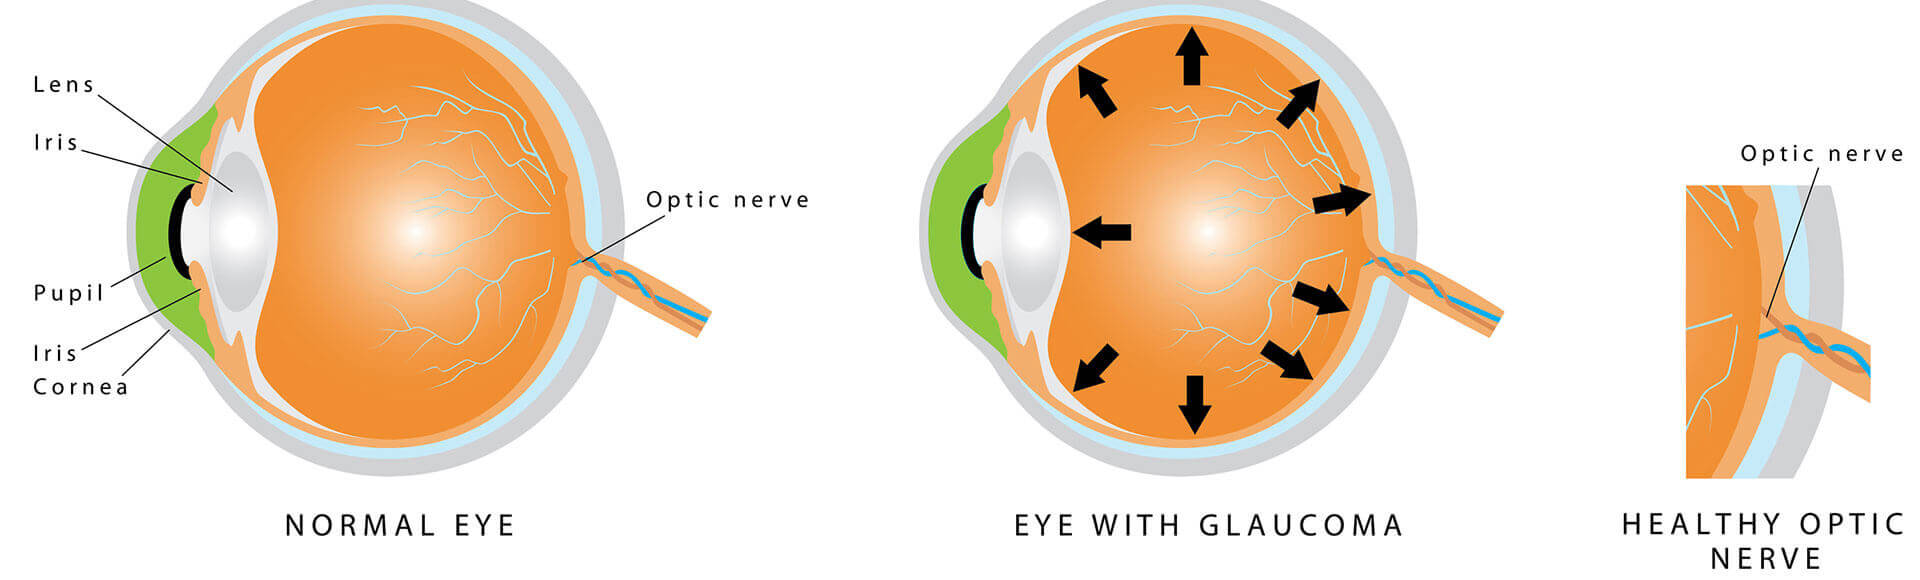 Eye with Glaucoma